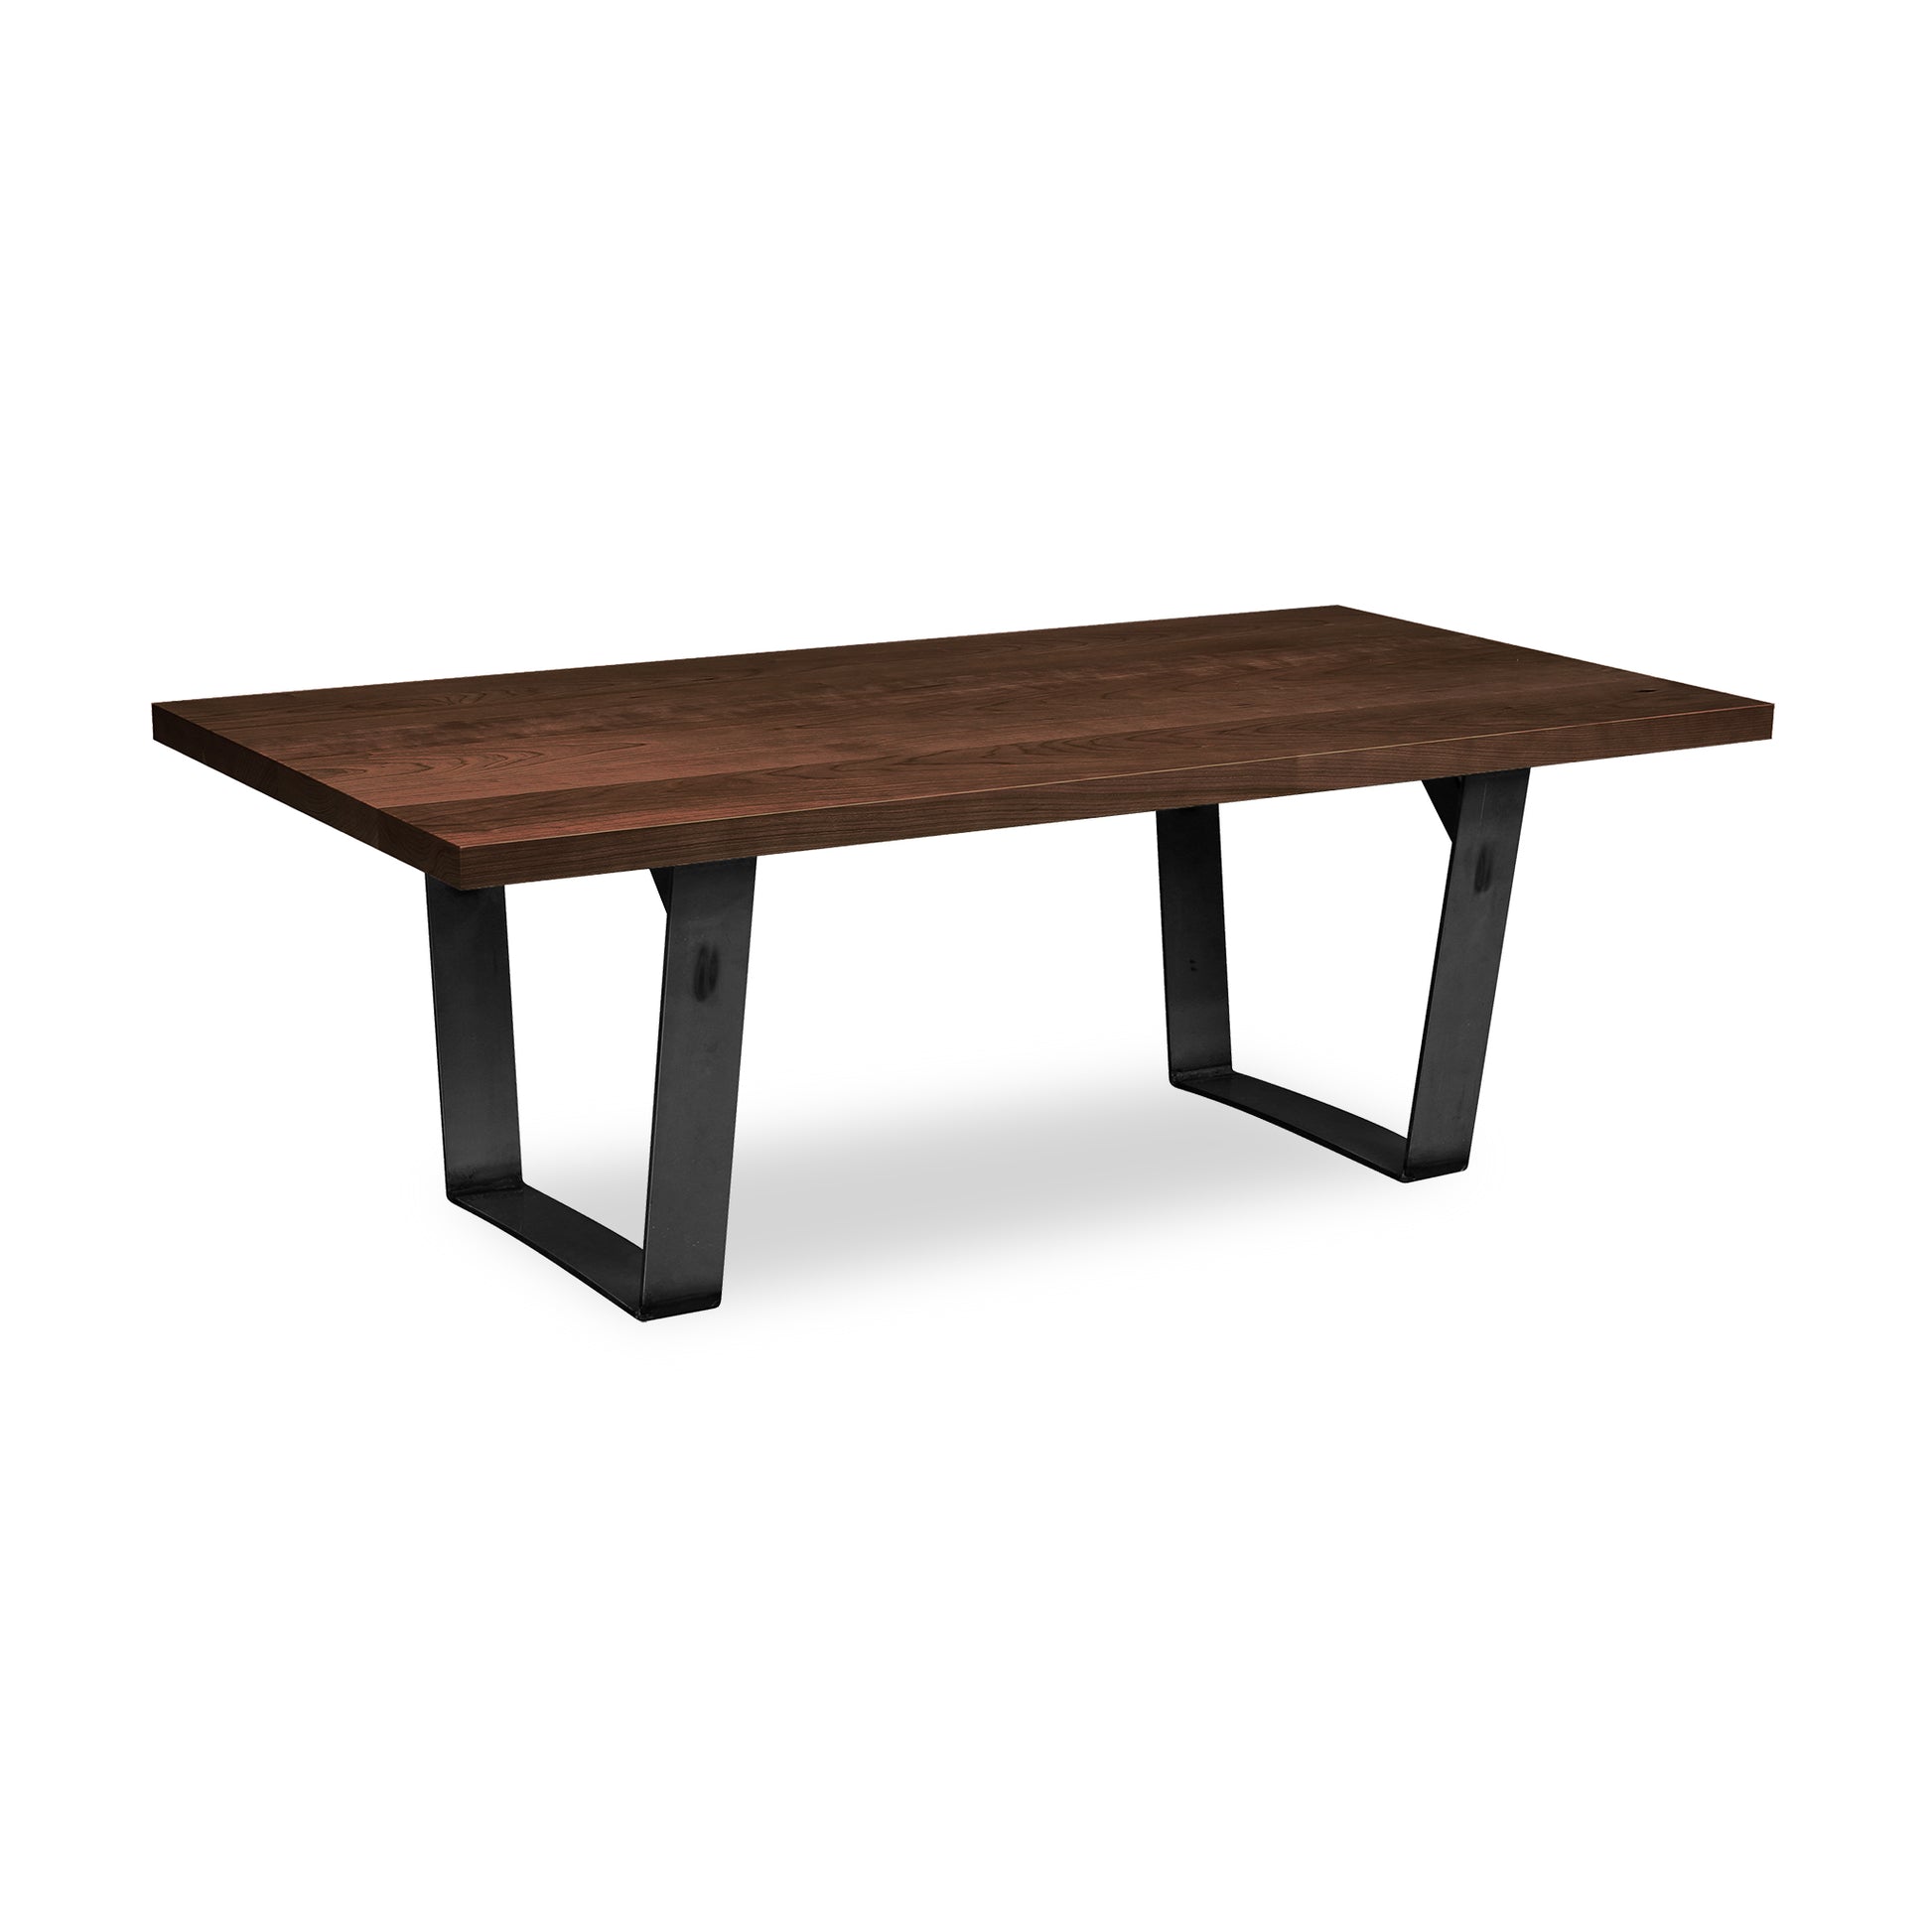 A sleek Metropolitan Coffee Table by Lyndon Furniture with black legs and a modern design.